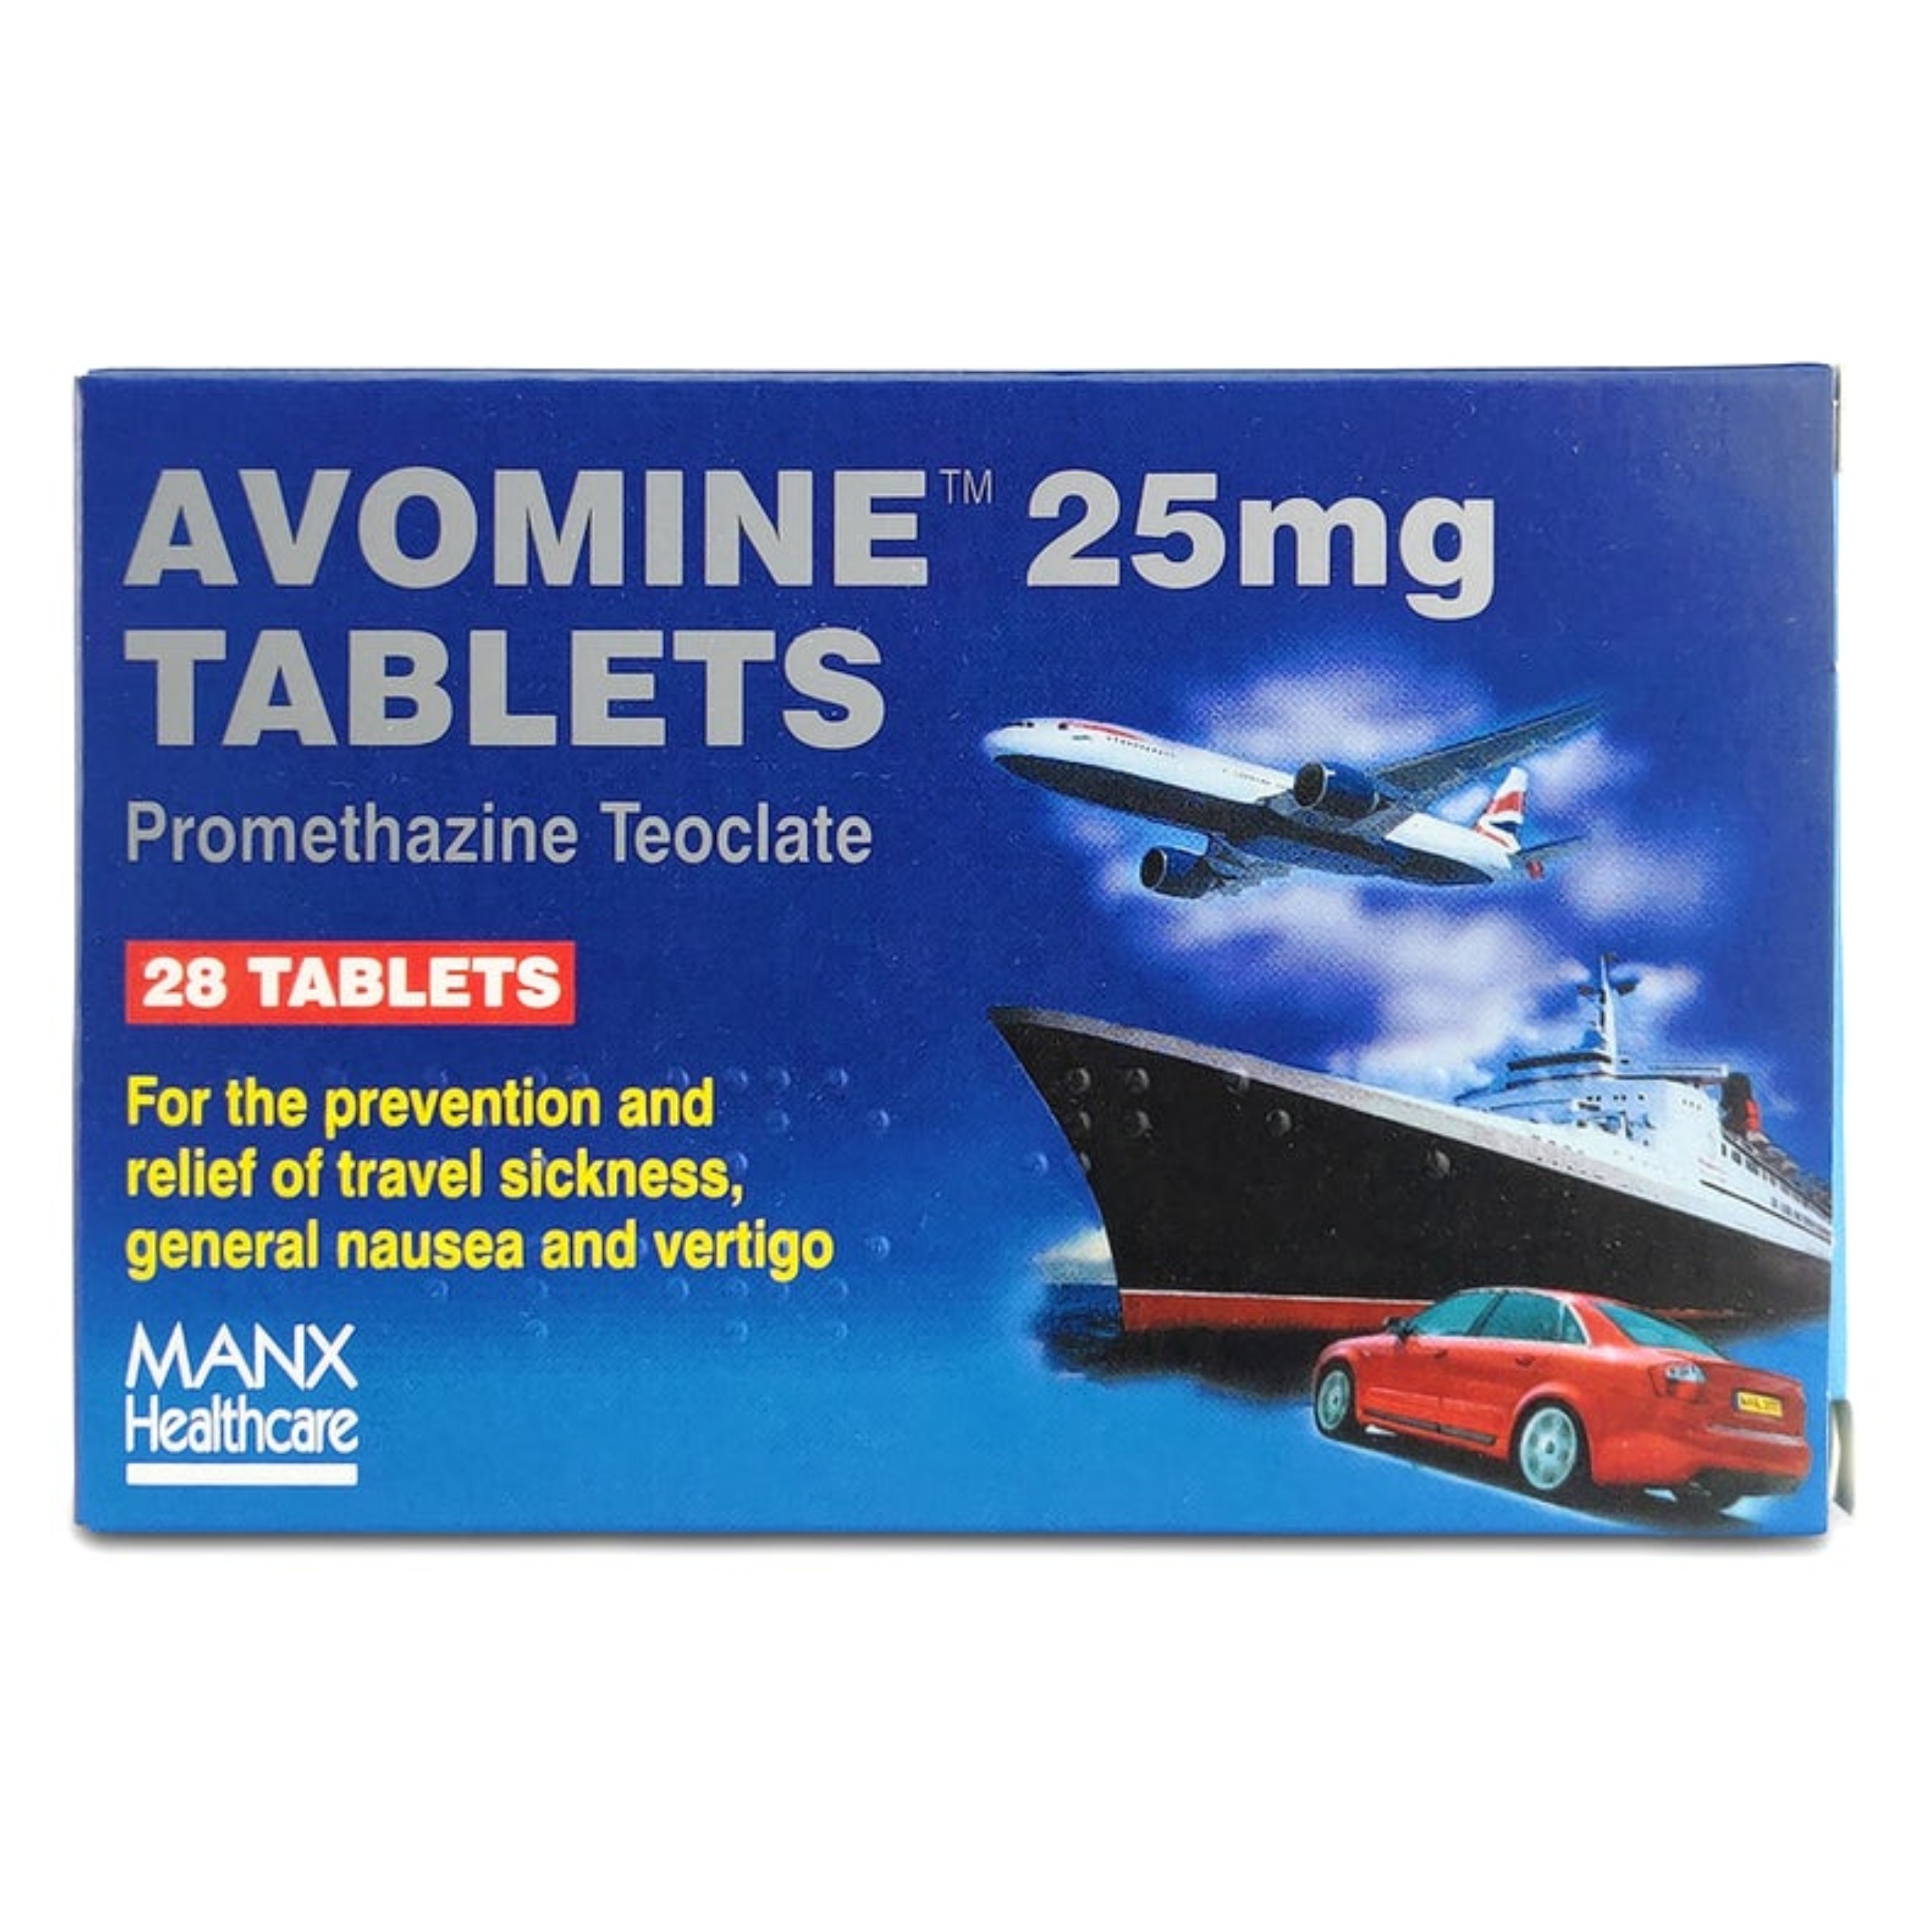 Avomine 25mg Tablets